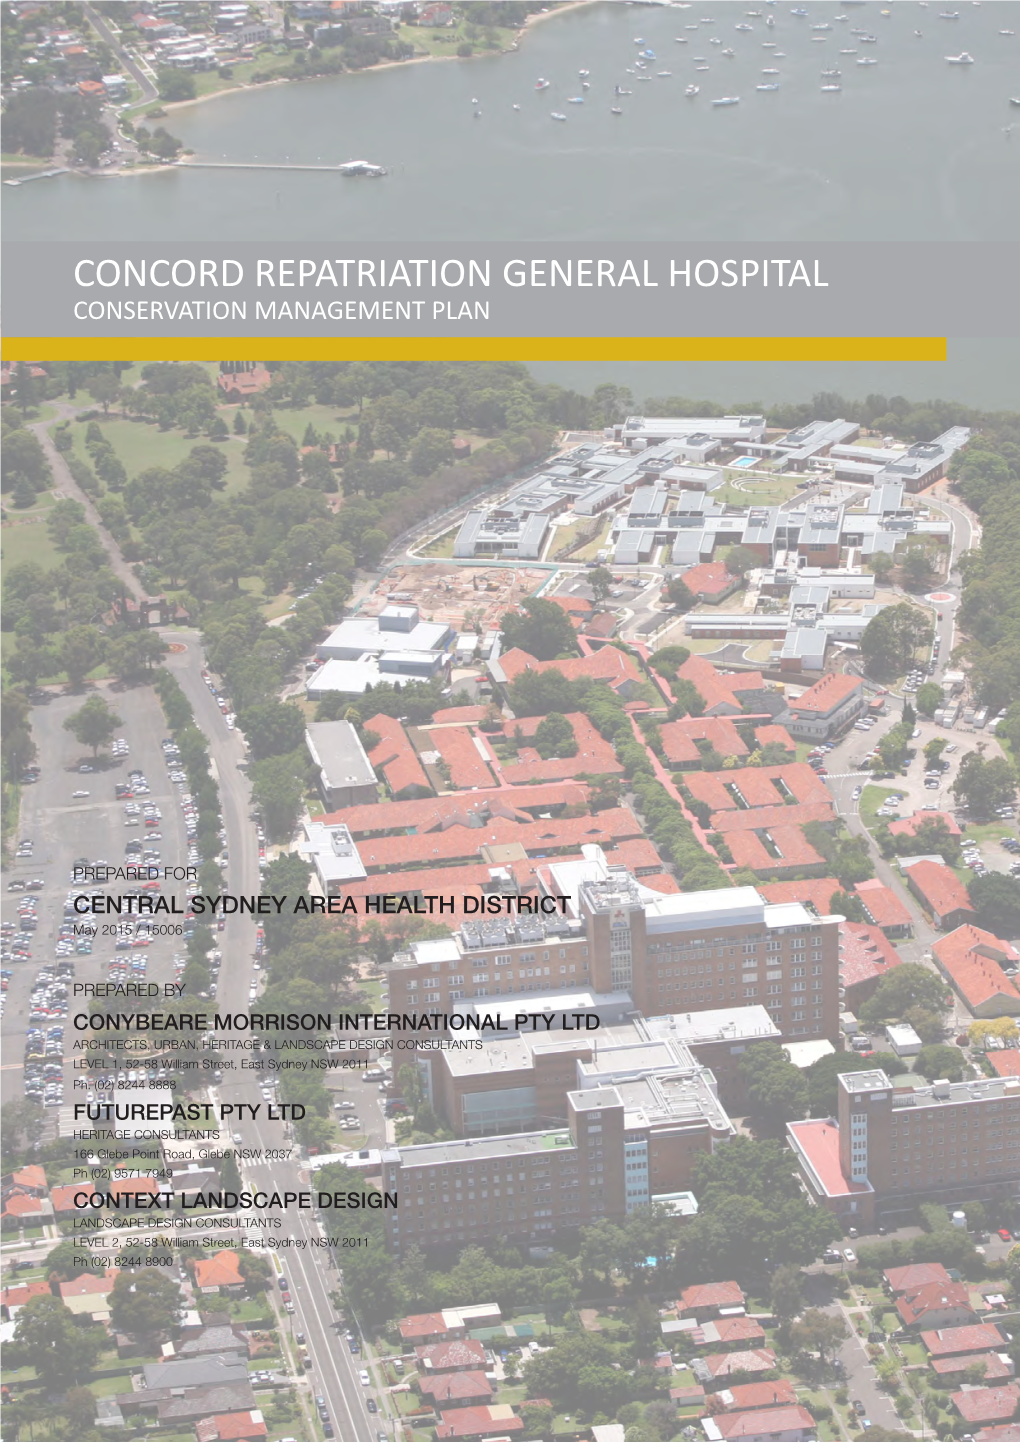 Concord Repatriation General Hospital Conservation Management Plan